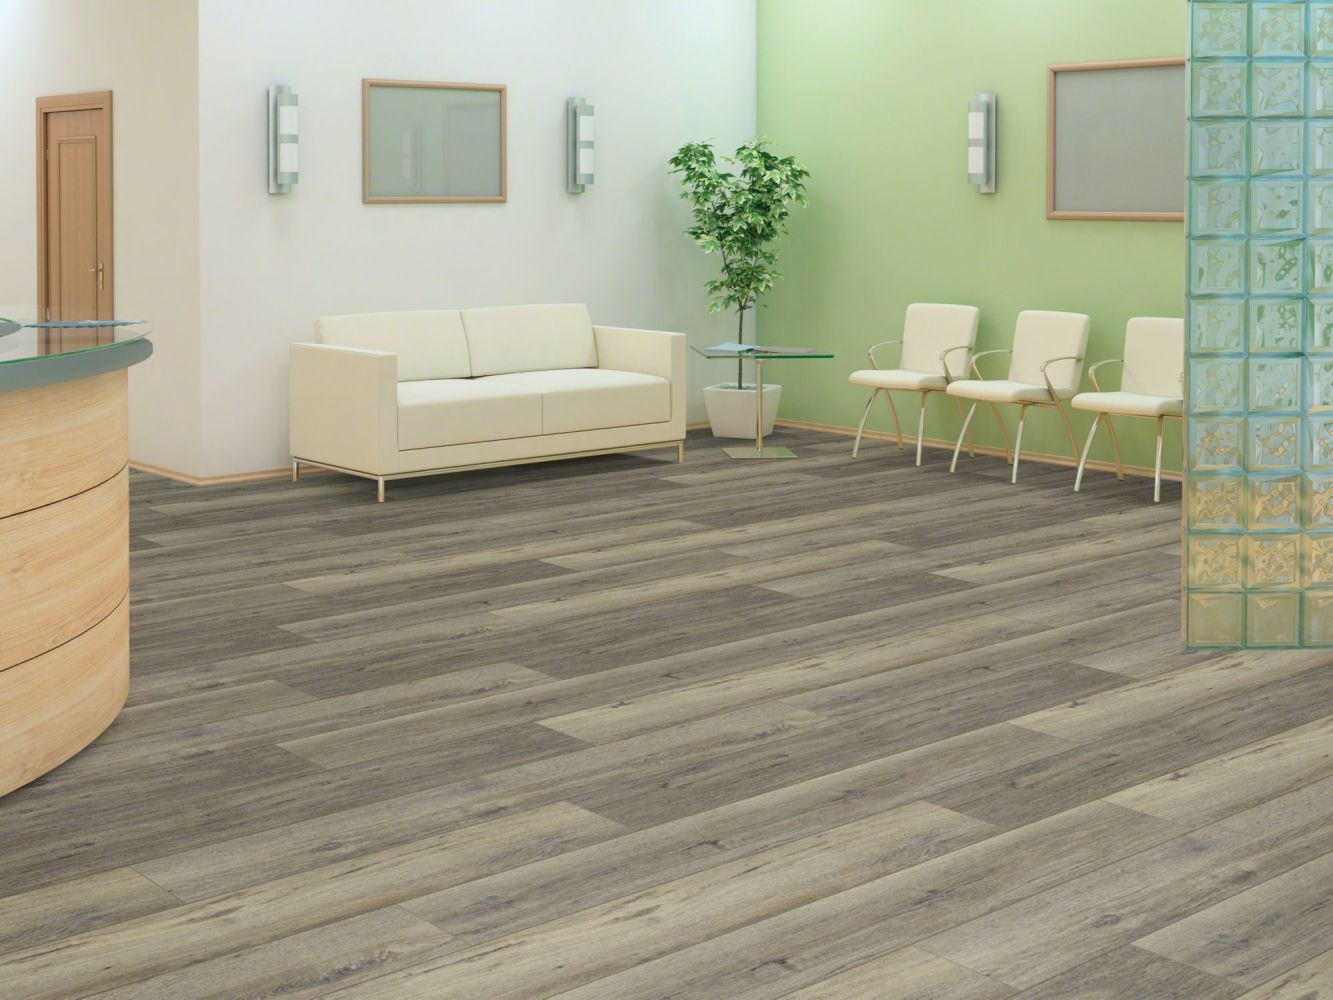 Shaw Floors Resilient Residential Intrepid HD Plus Sandy Oak 05005_2024V